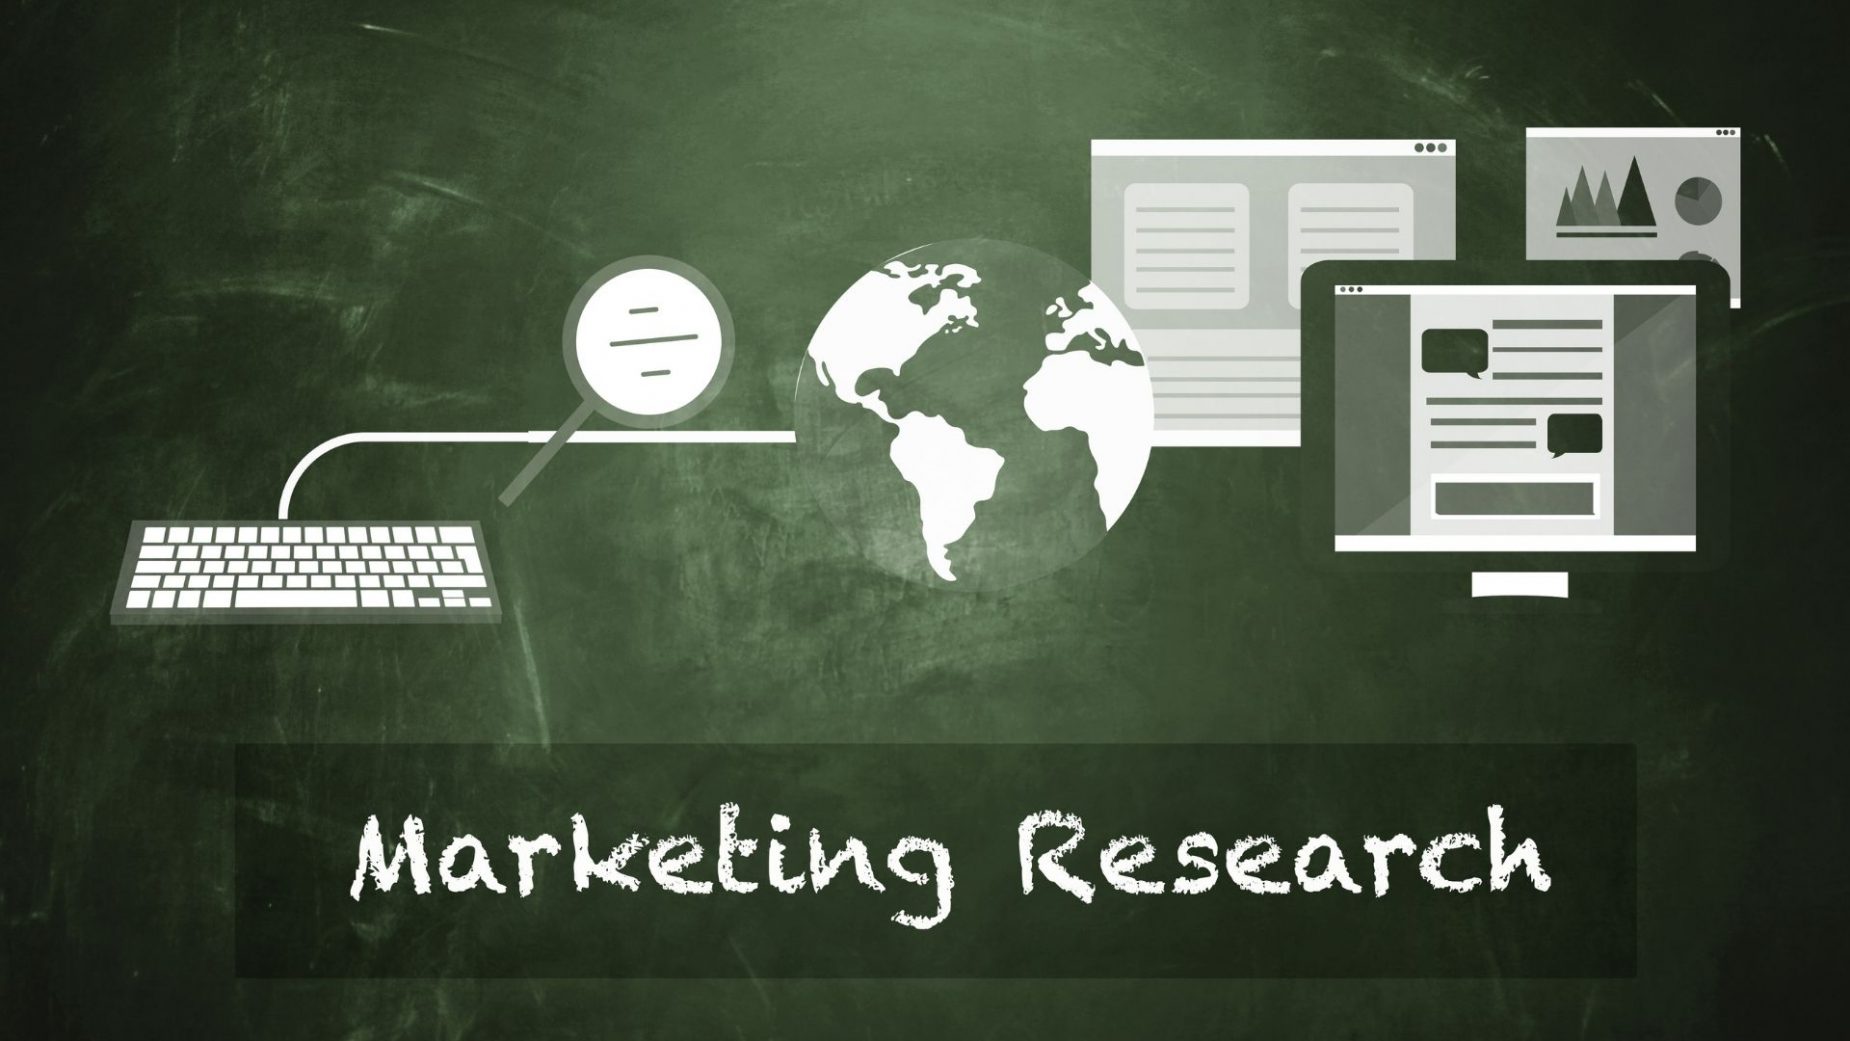 Market Research Services Market